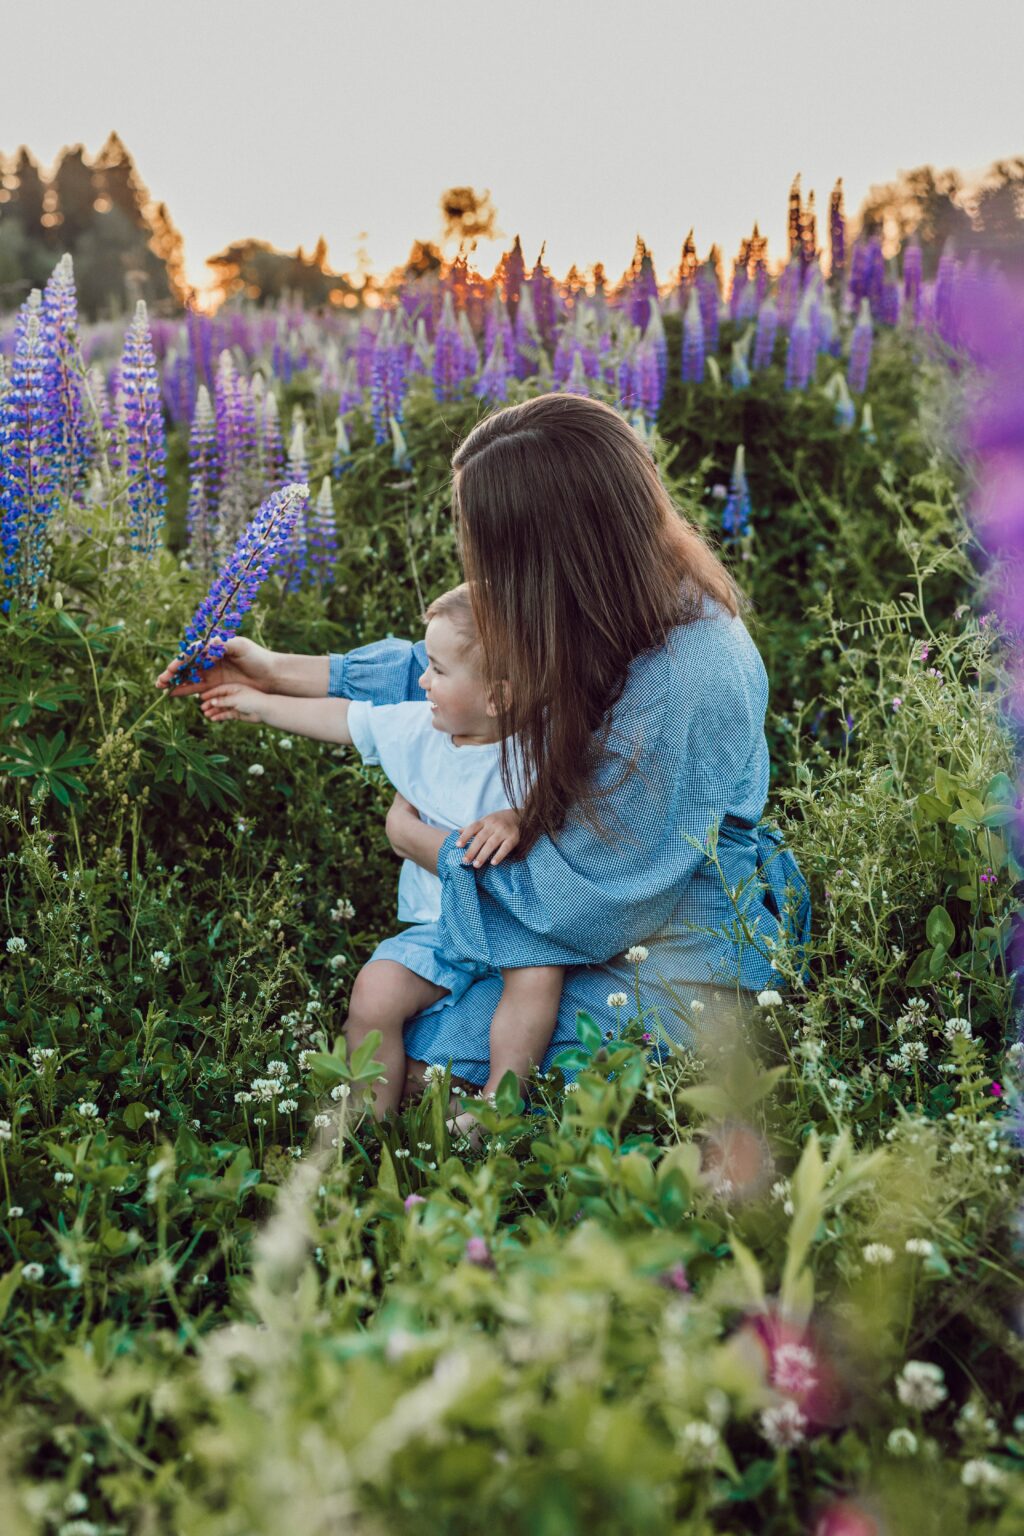 woman child outdoors natural activities flowersa